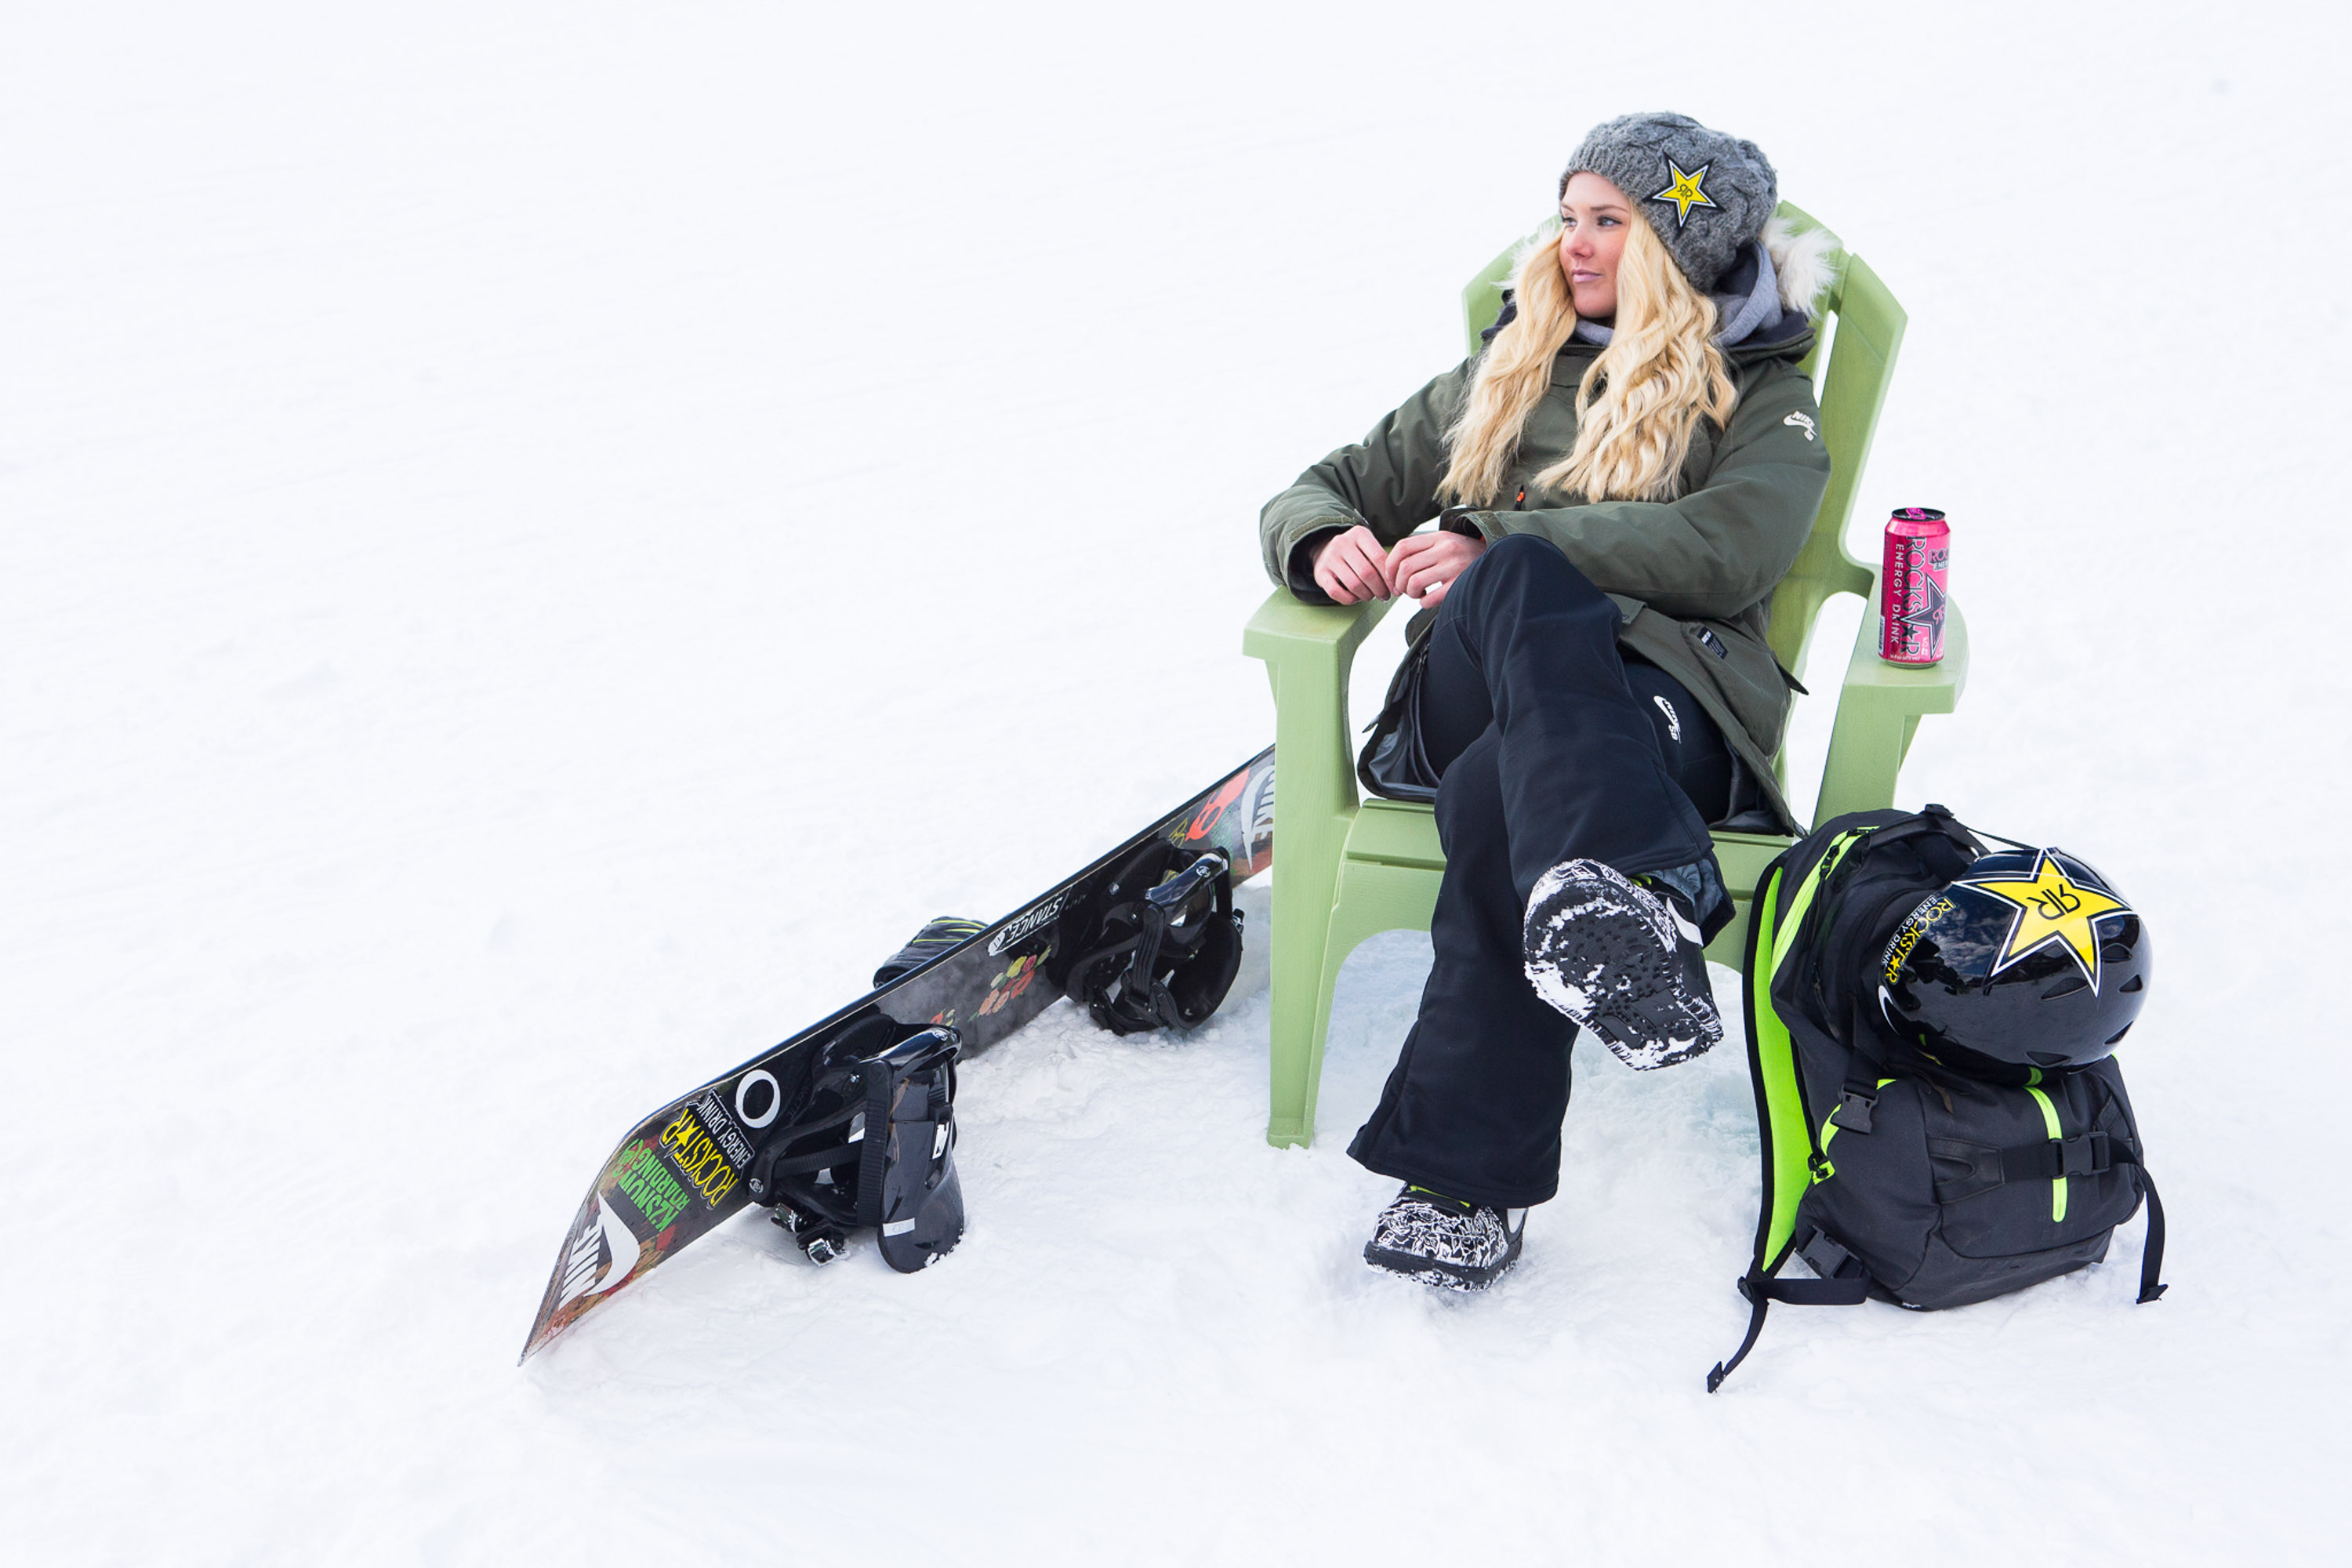 Silje Norendal - Snowboard - Rockstar Energy Drink